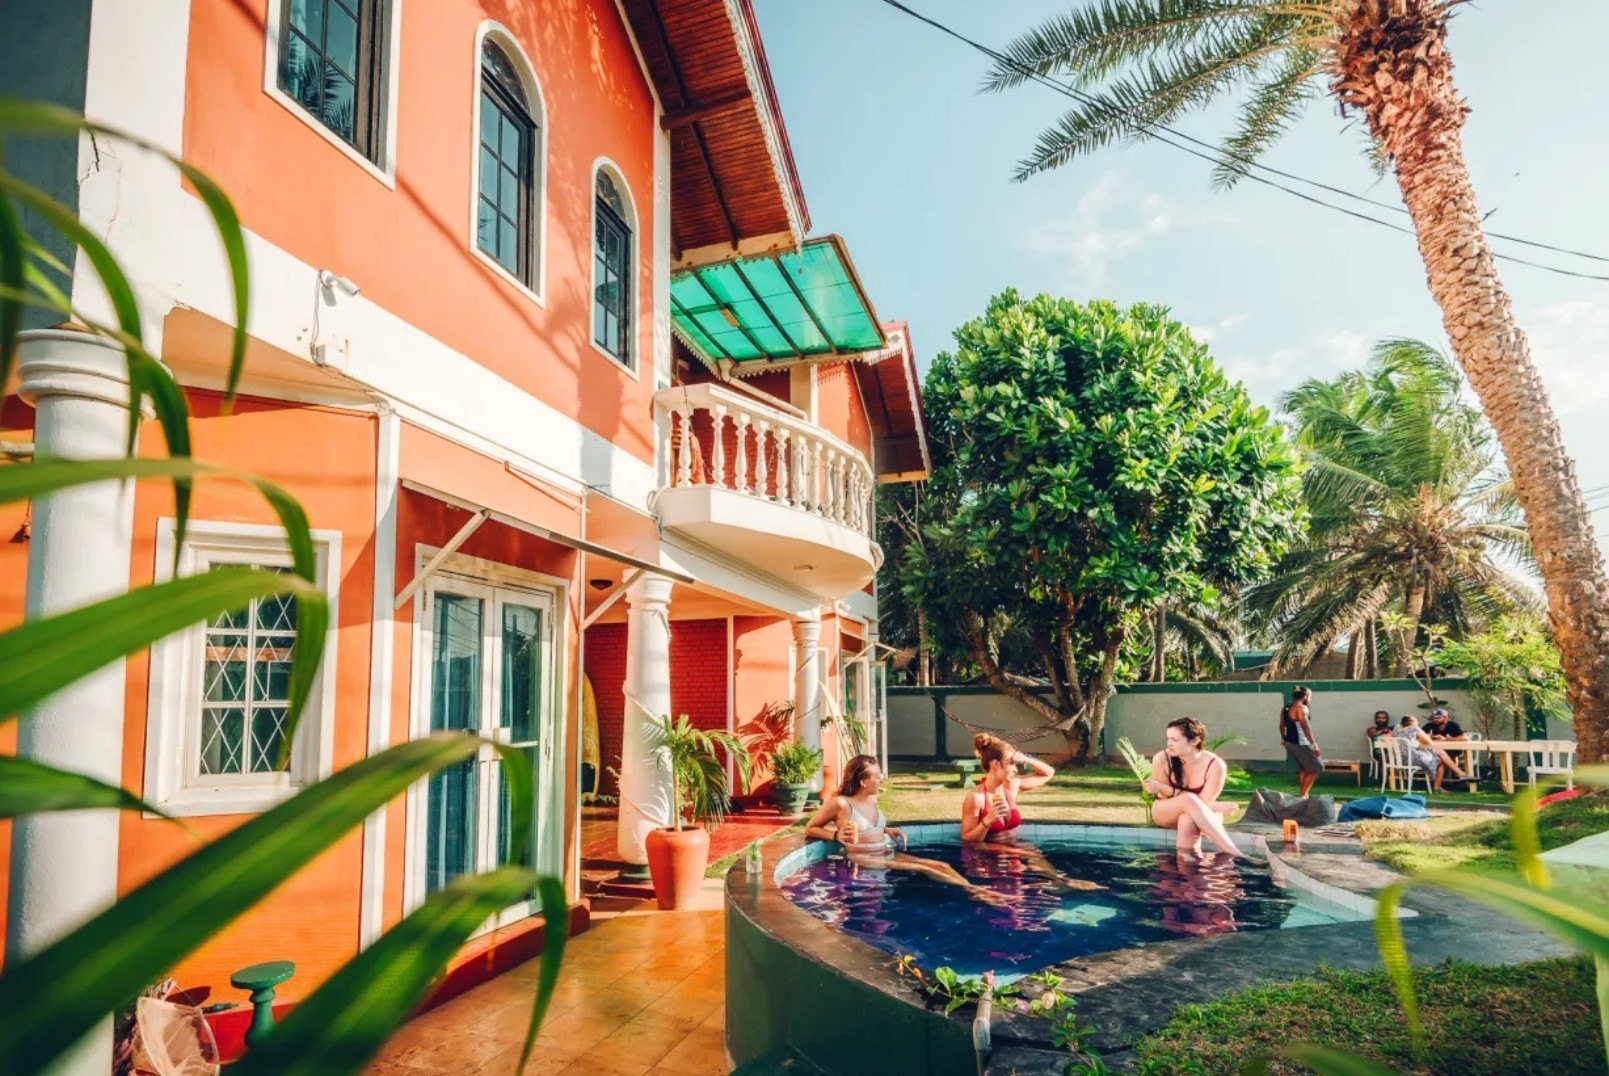 Where to Stay in Negombo: YoYo Beach Hostel